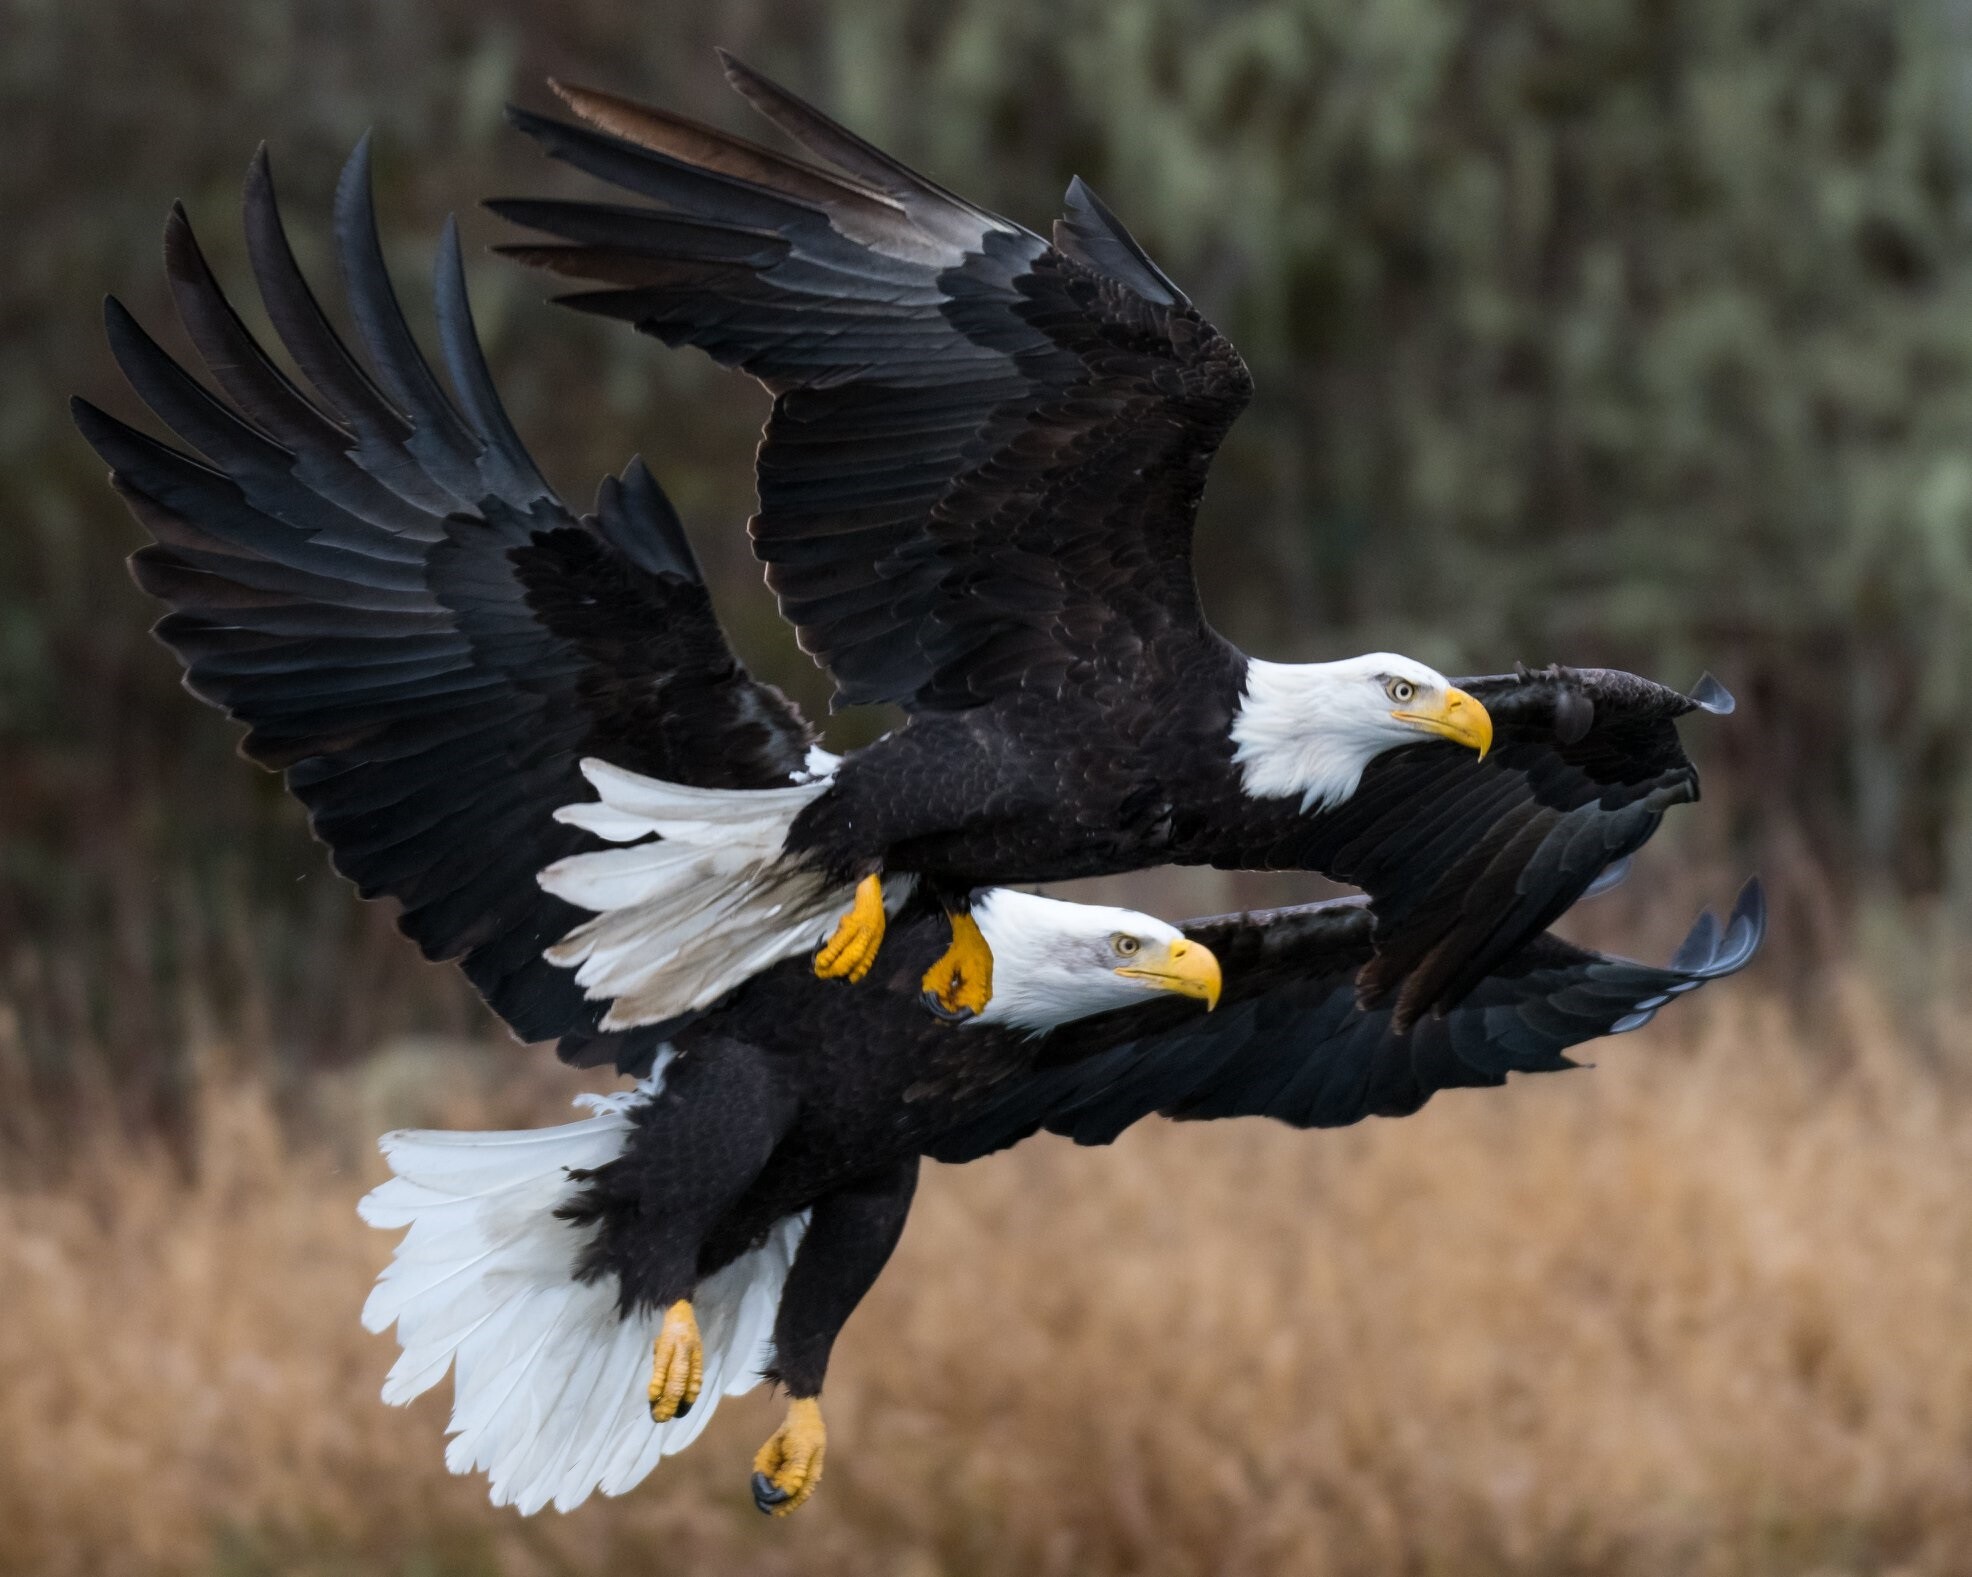 when do bald eagles migrate?